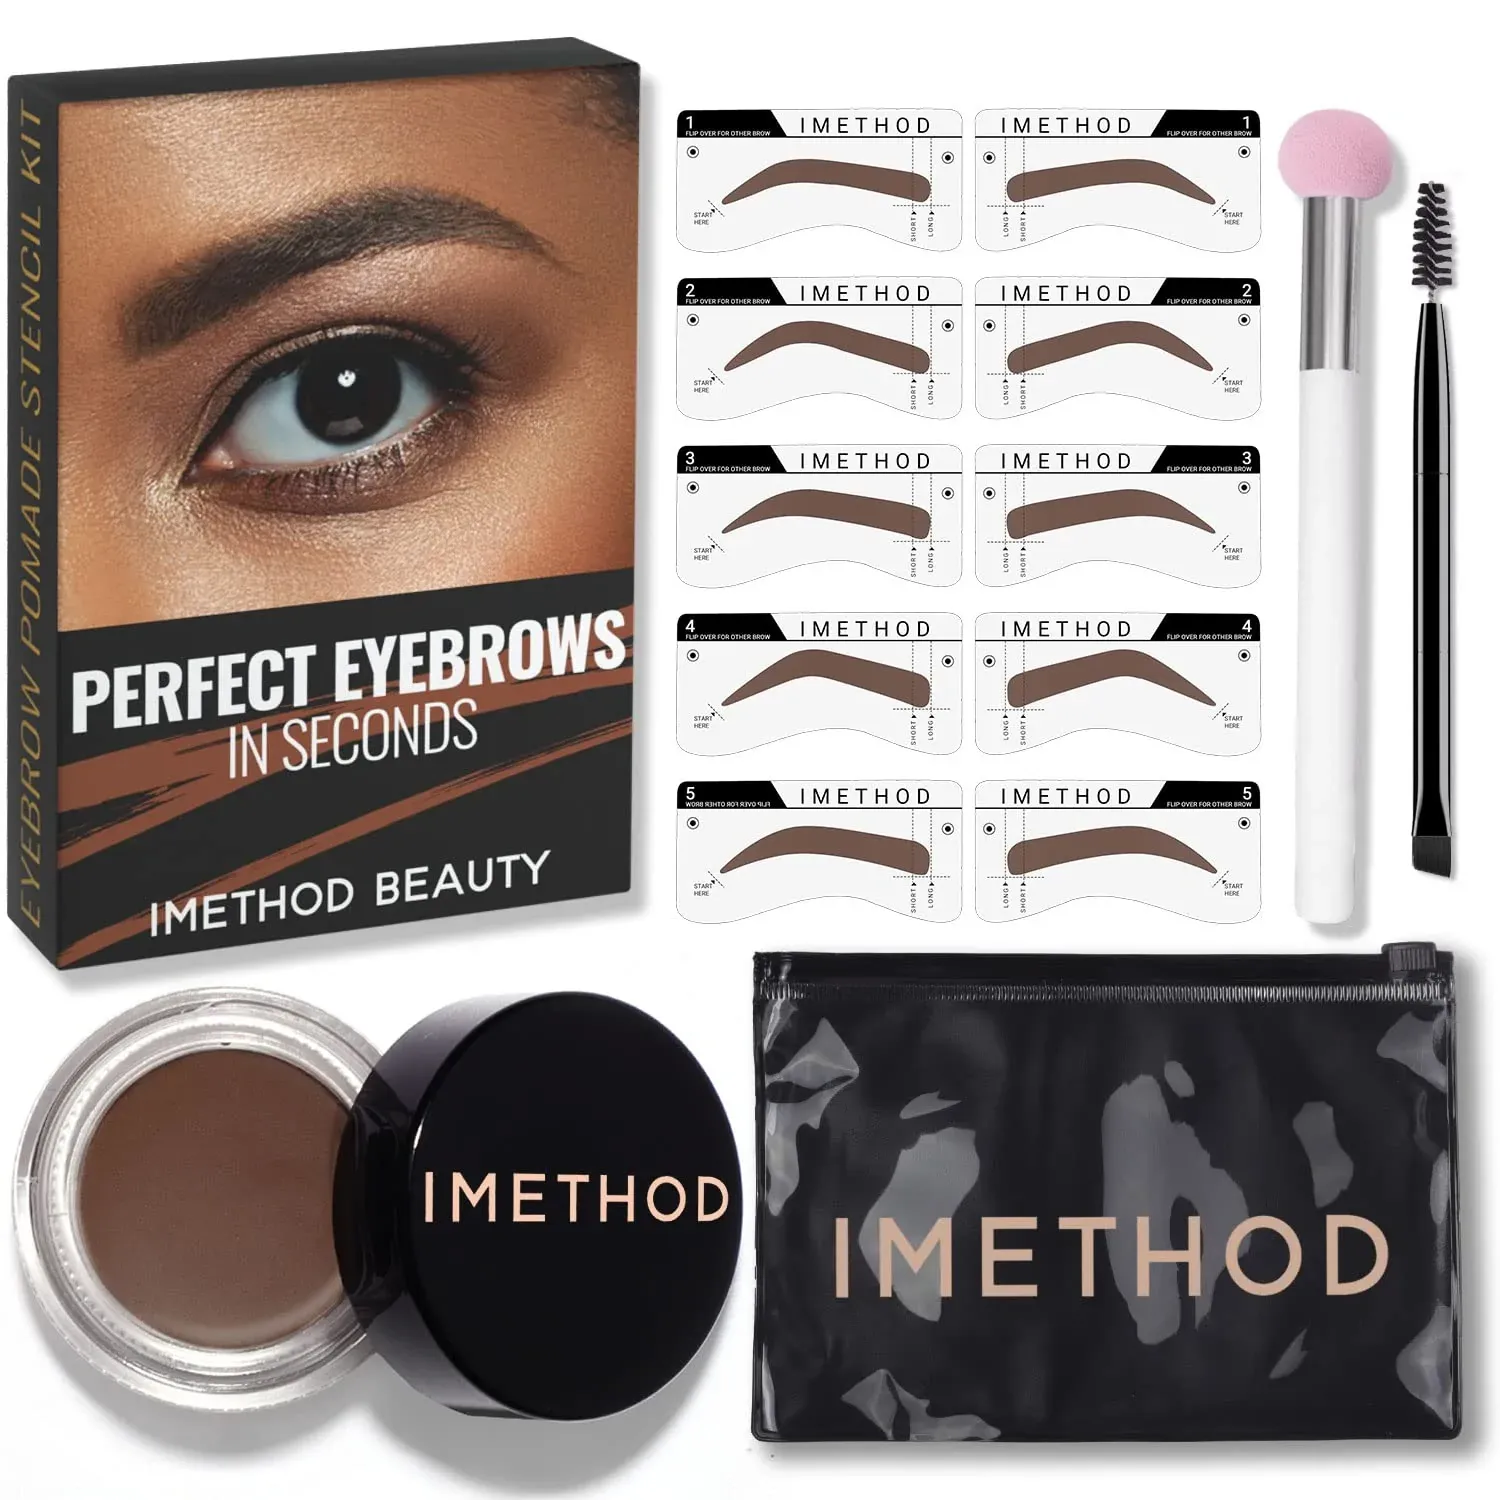 Free IMethod Eyebrow Stamp And Eyebrow Stencil Kit